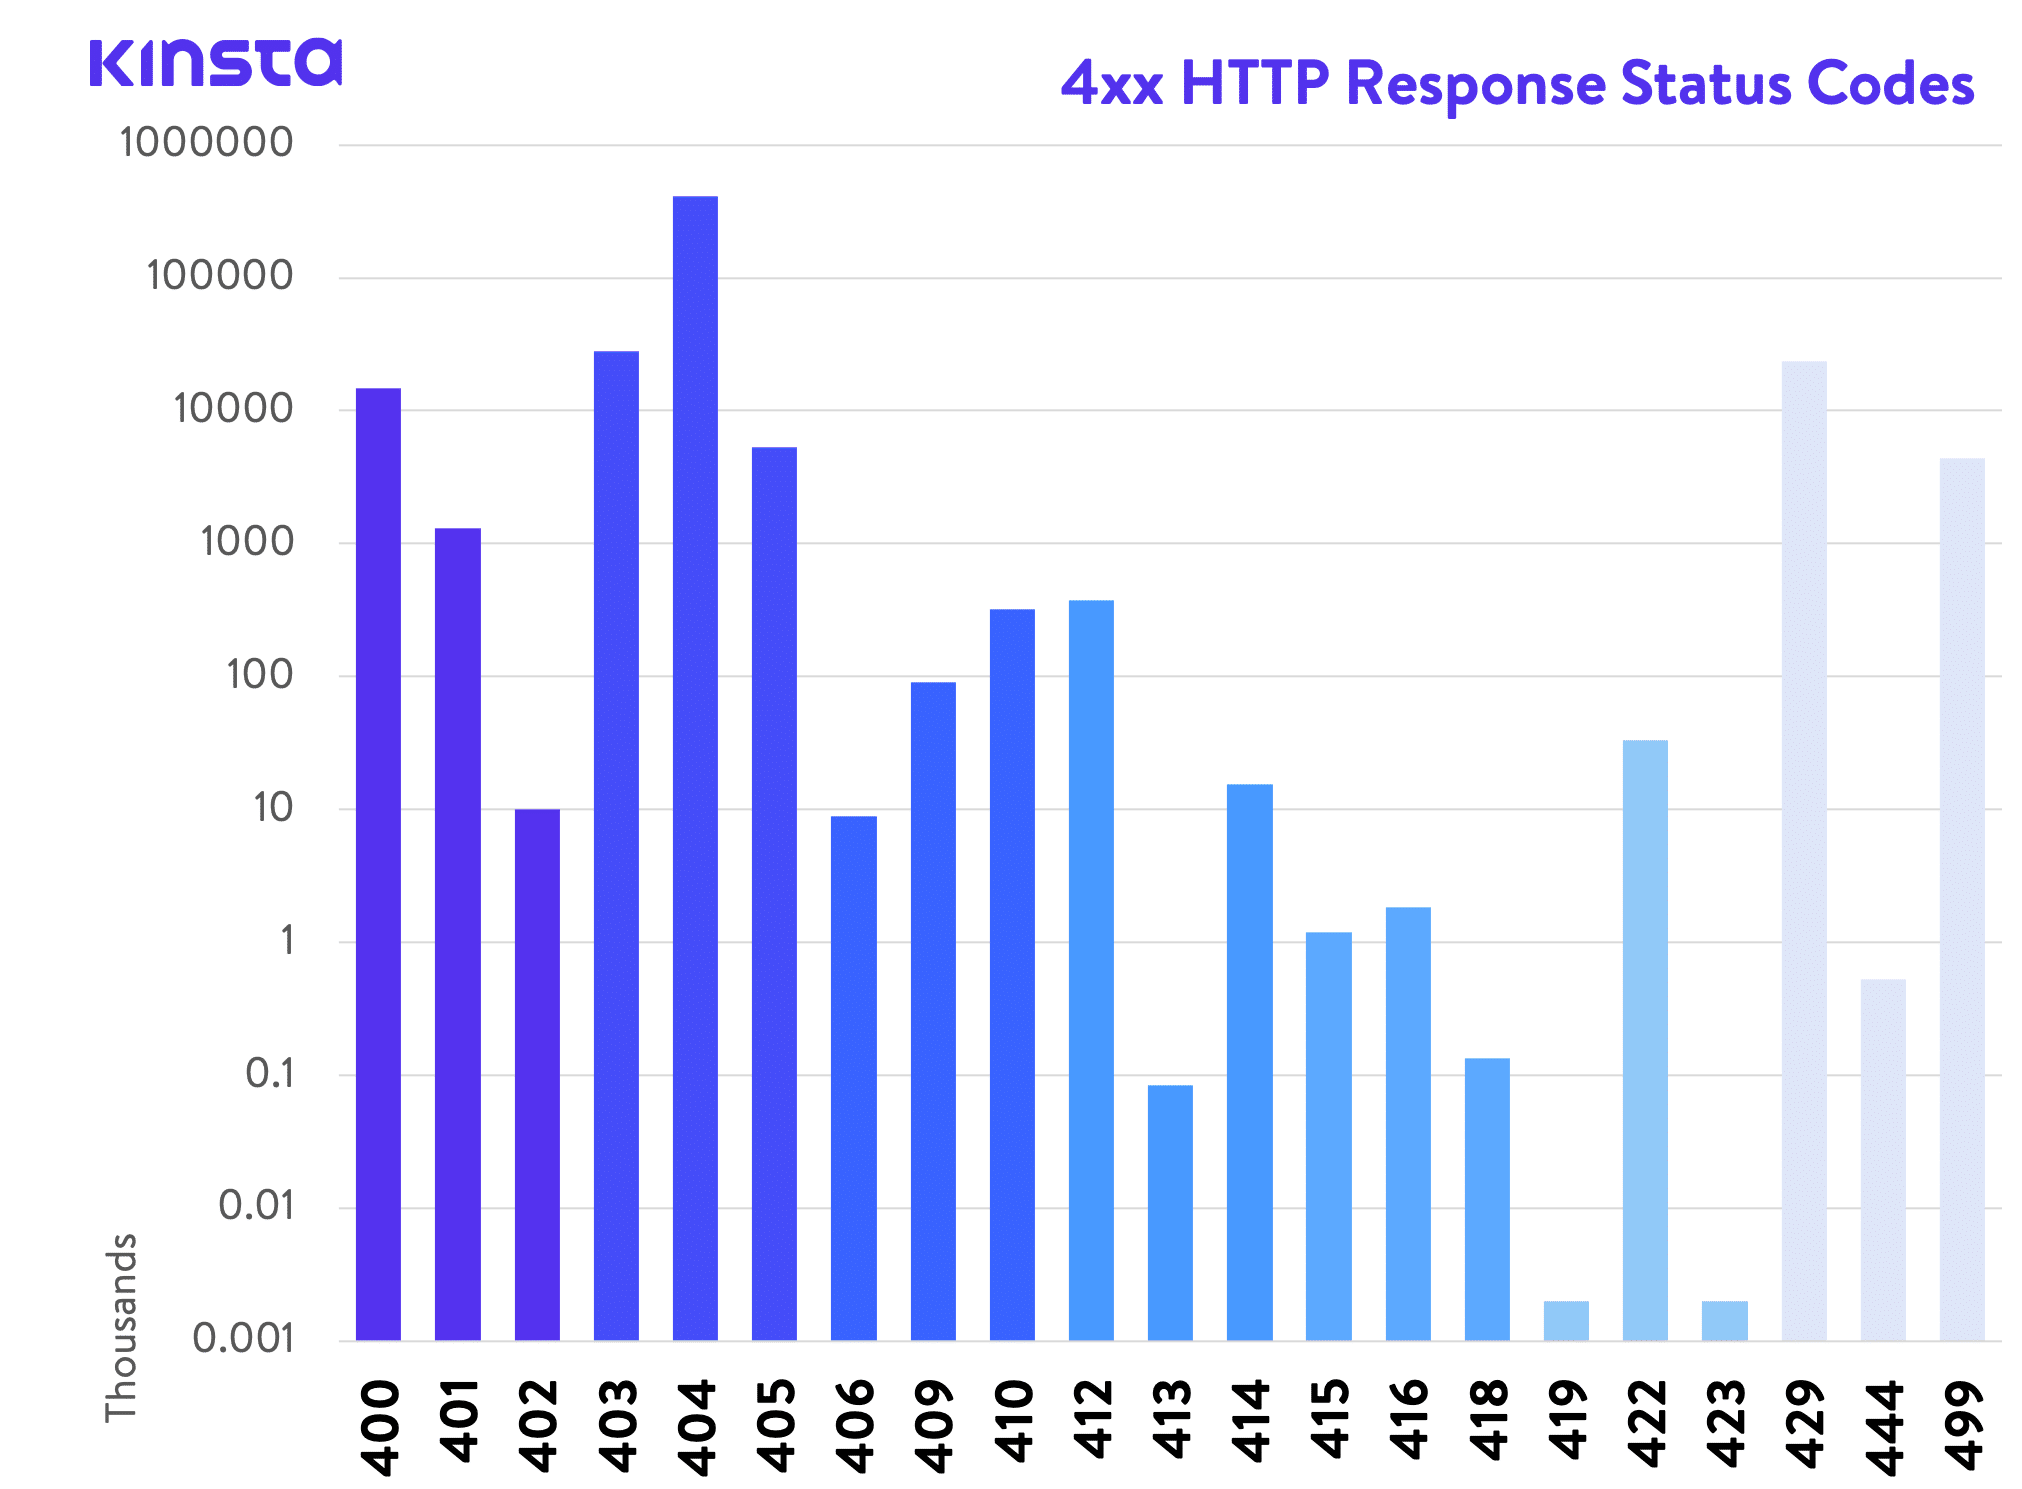 4xx HTTP response status codes